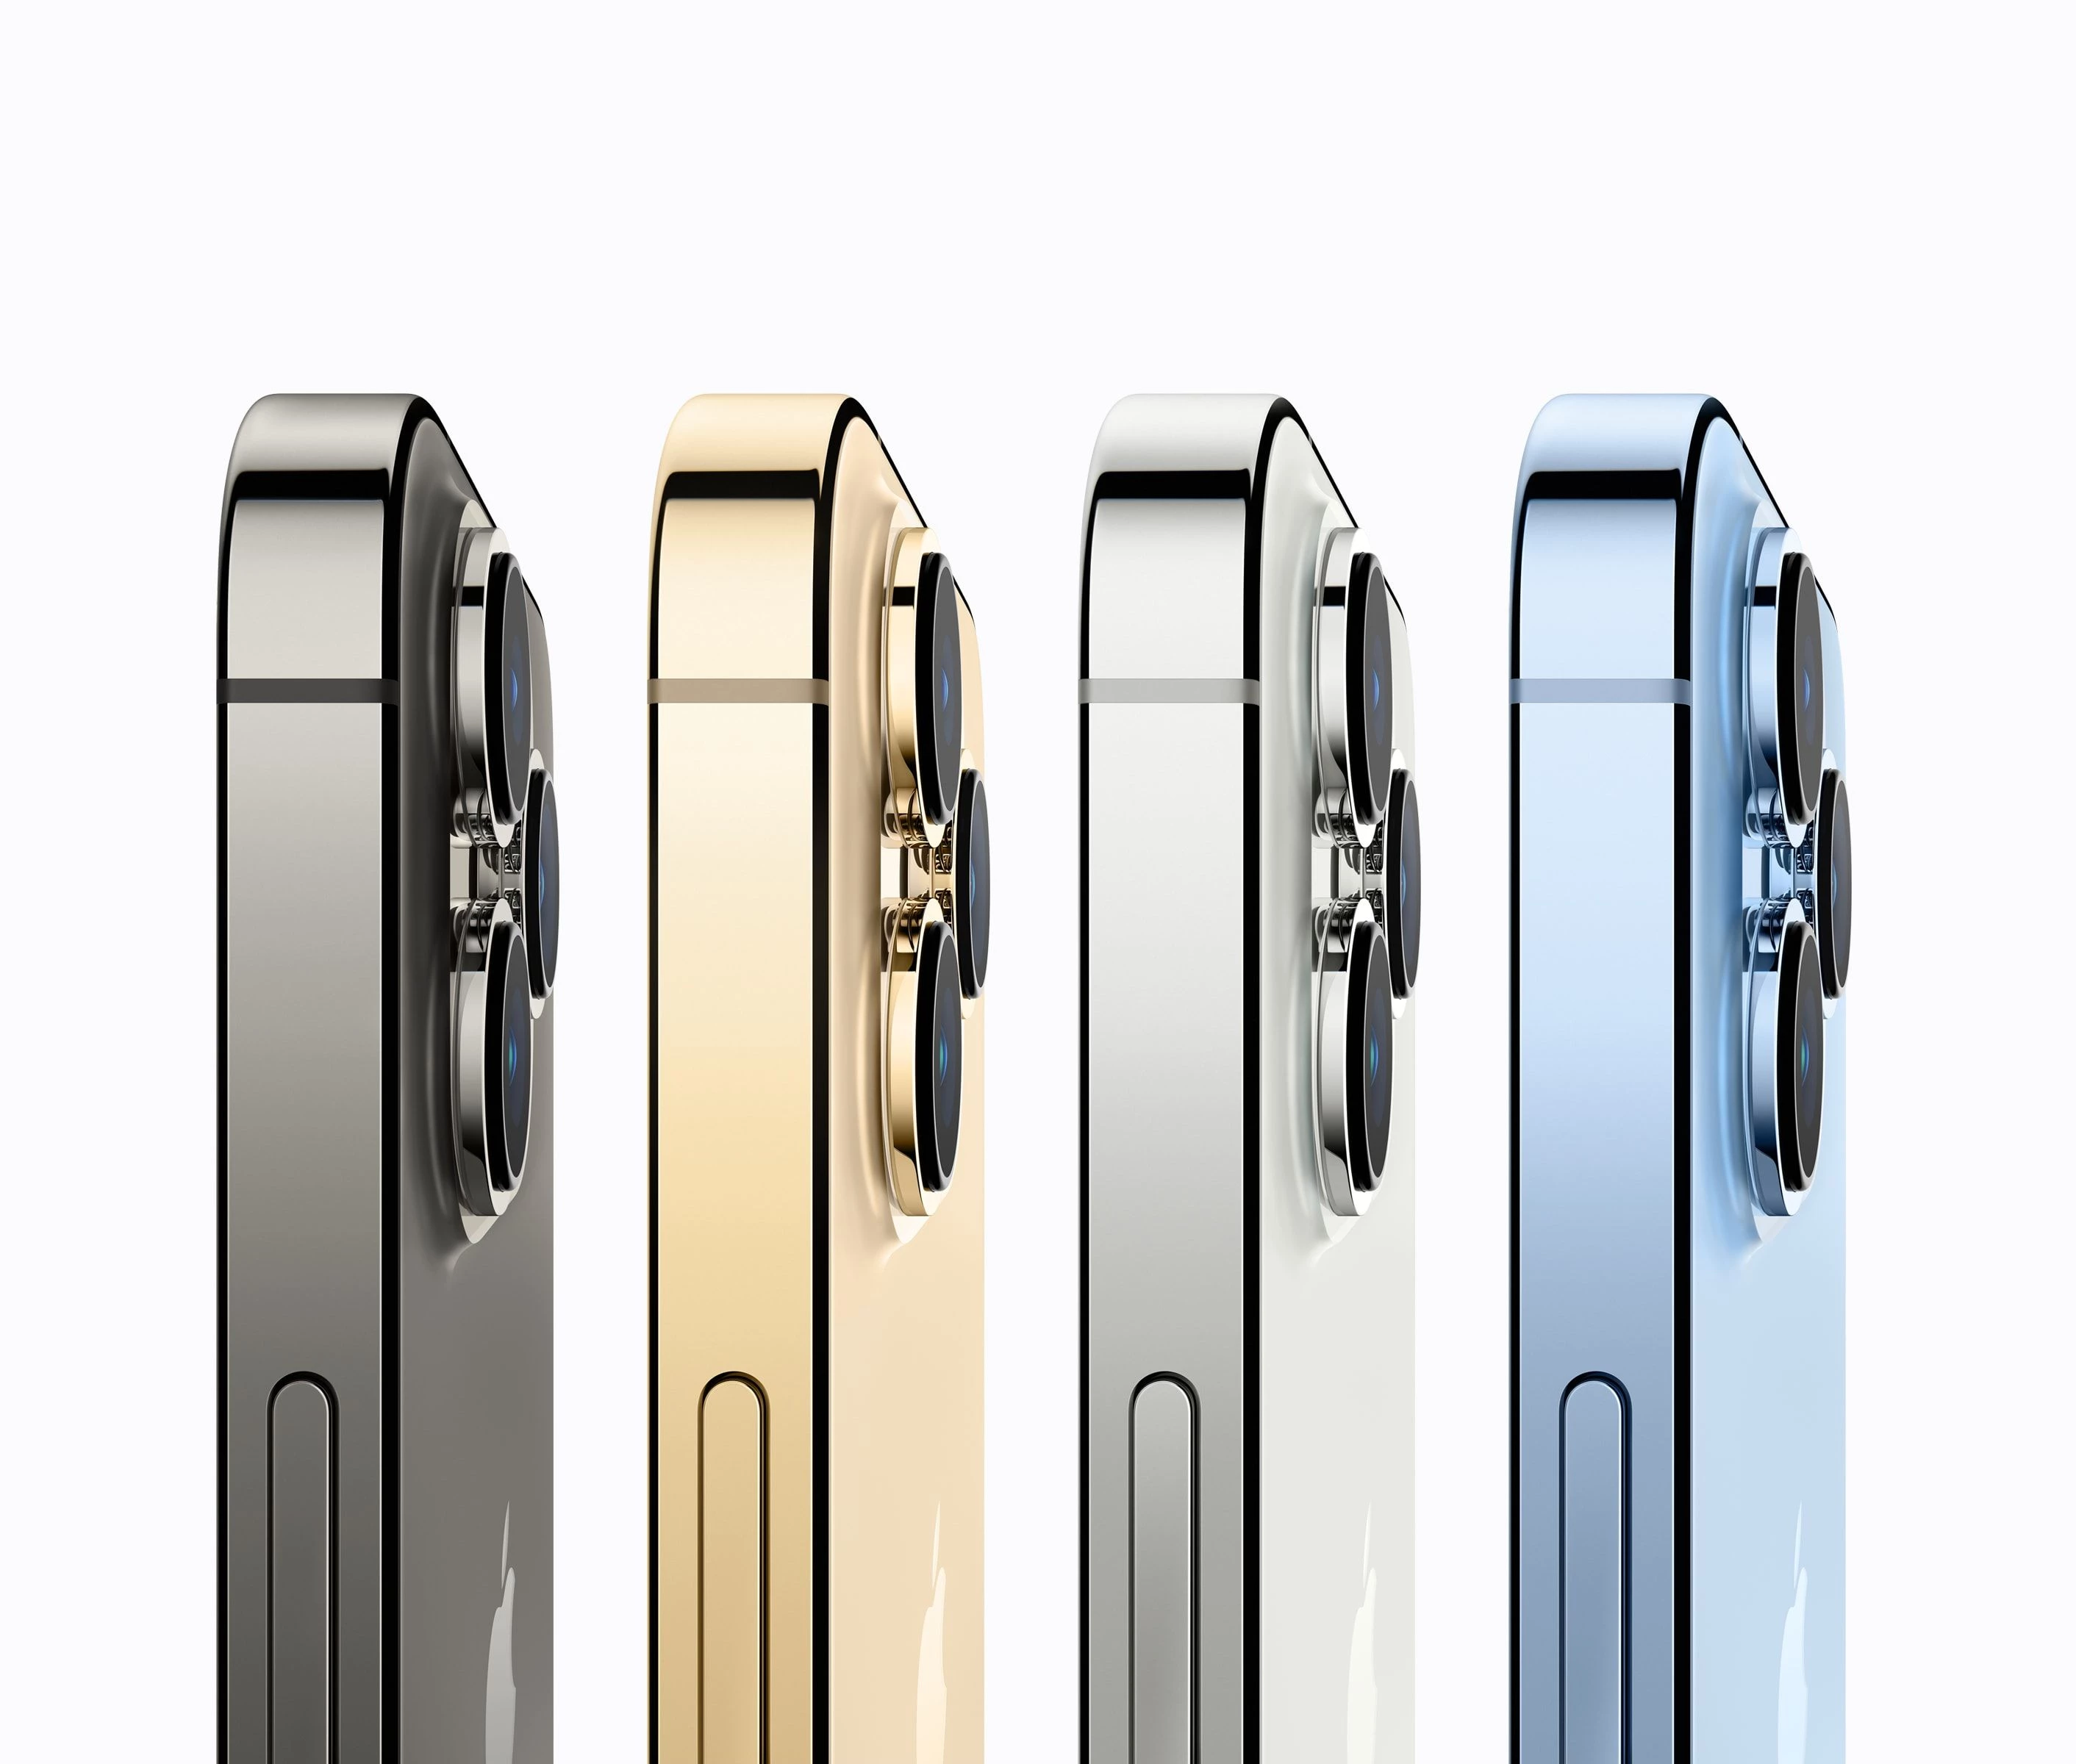 Apple silver iPhone 13 Pro 128GB Silver